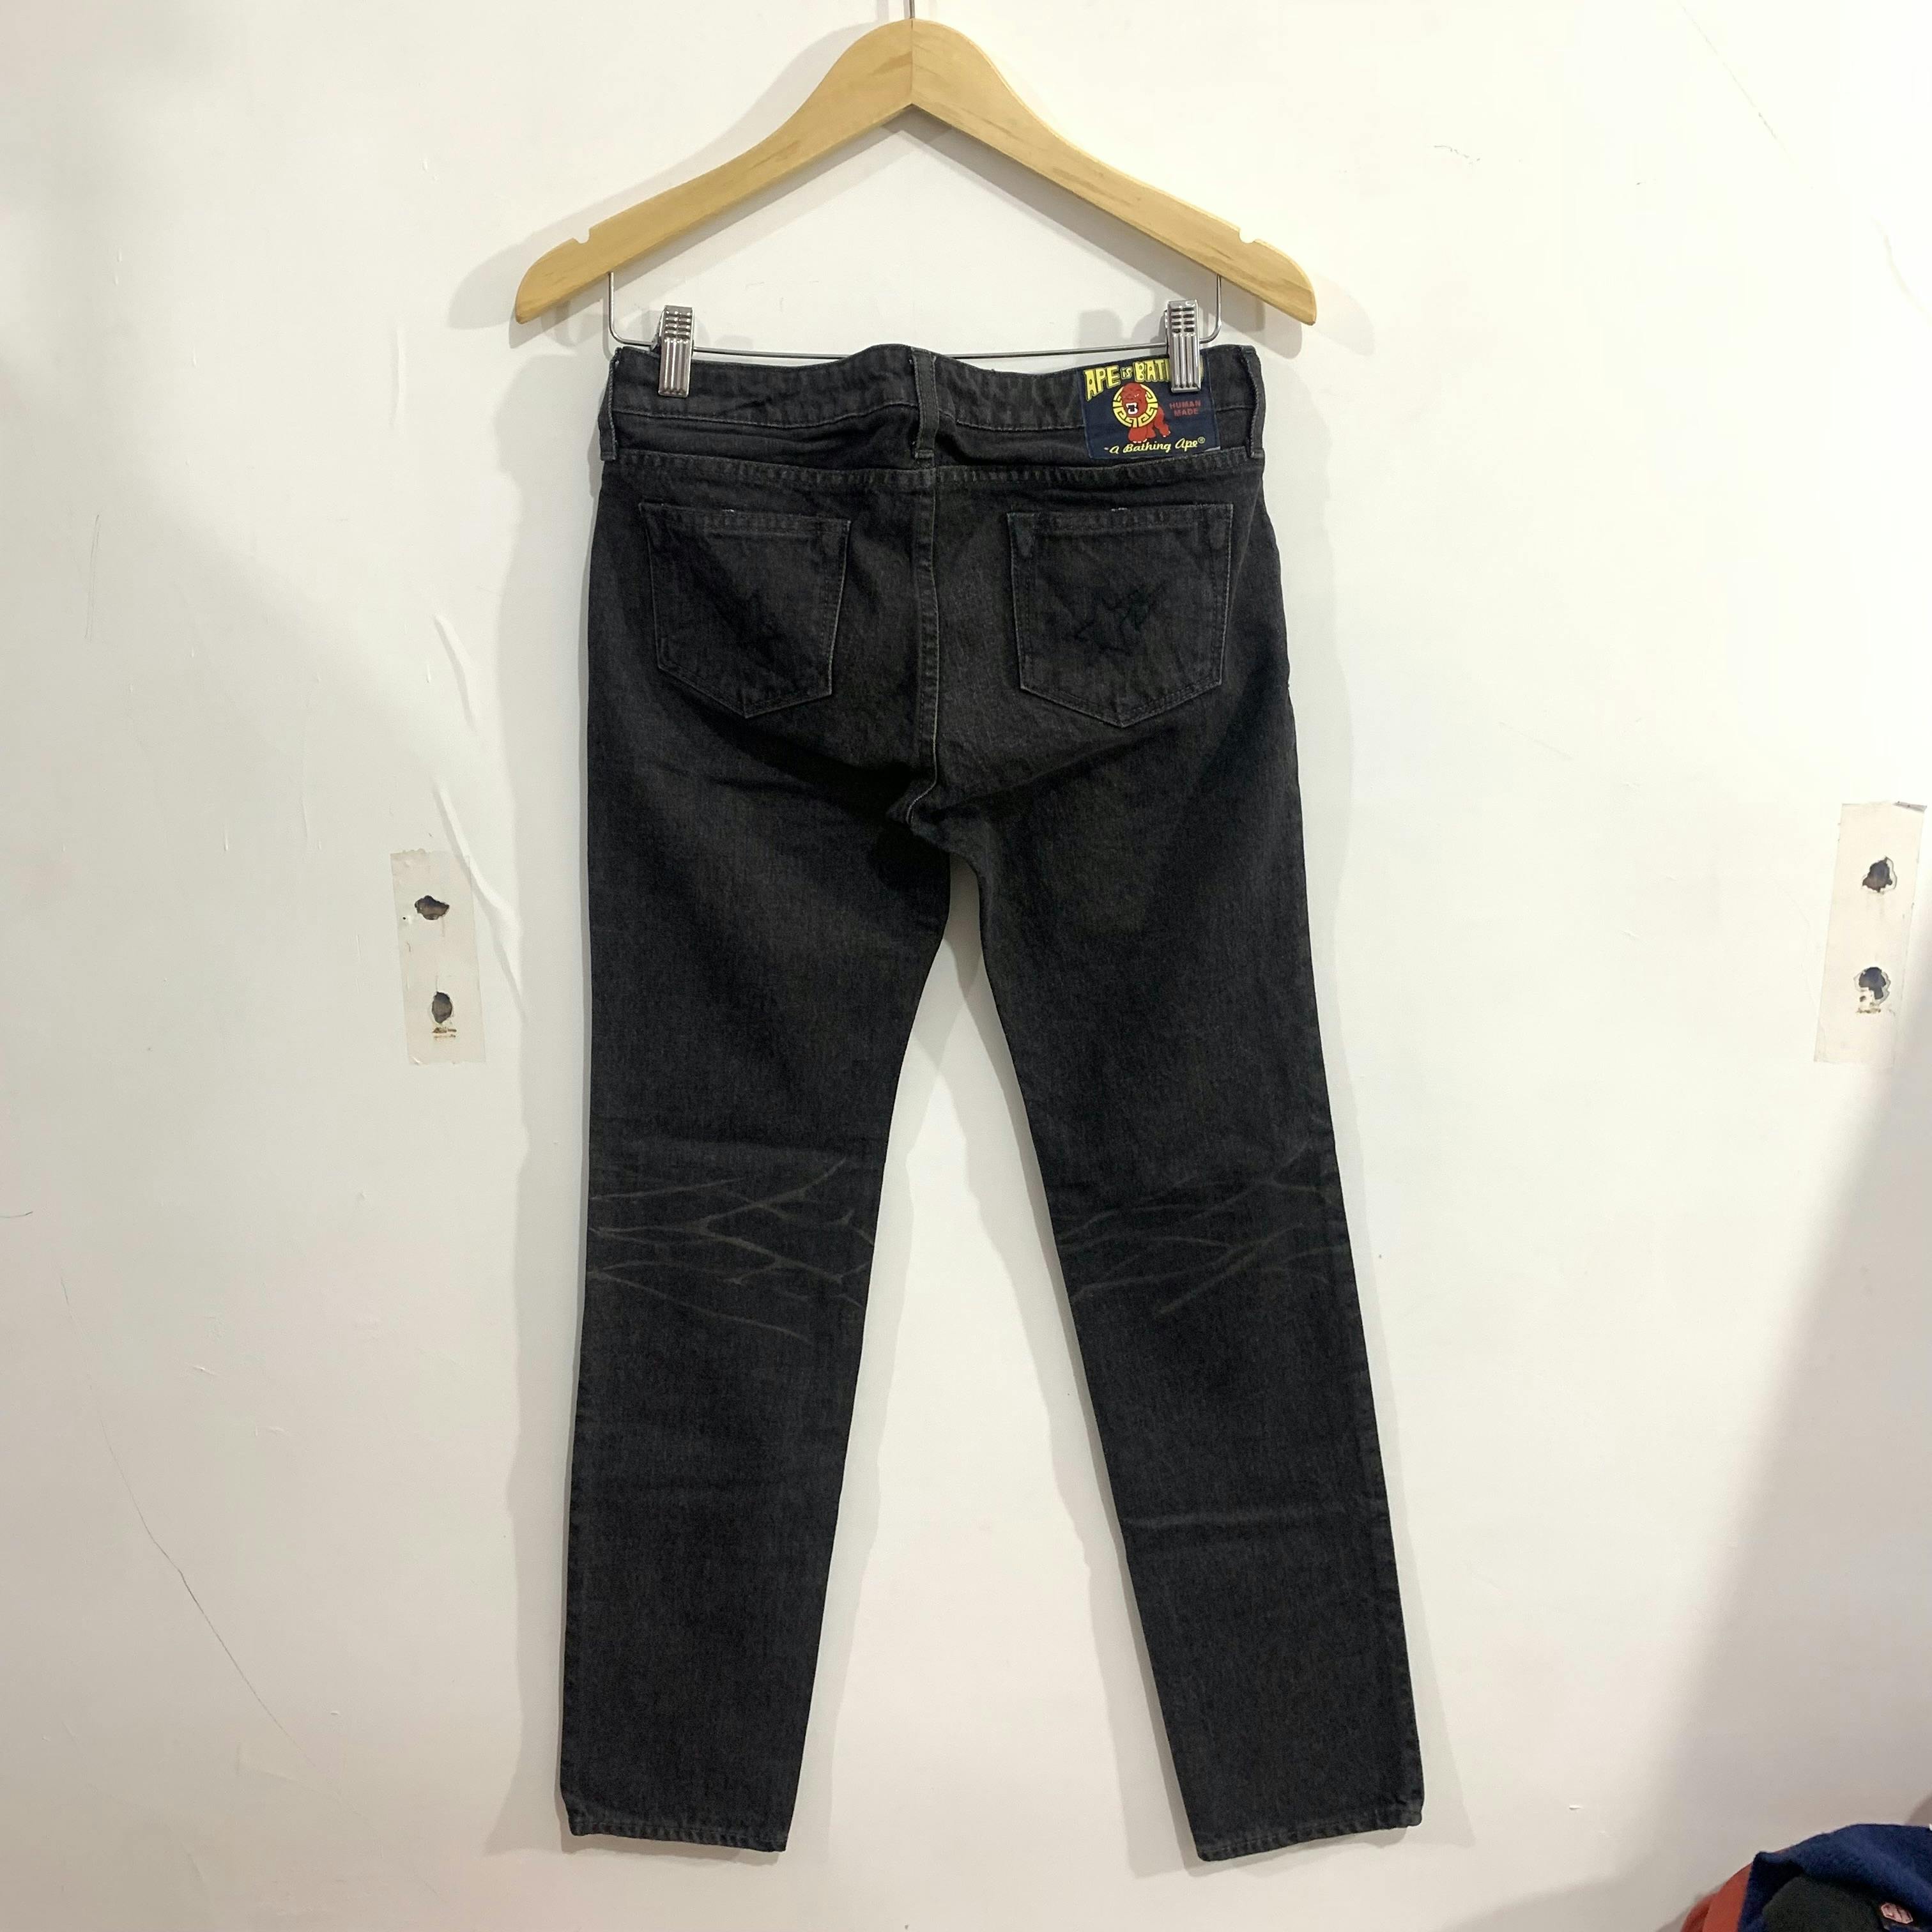 Bape x Human Made Denim Jeans Pants - 1